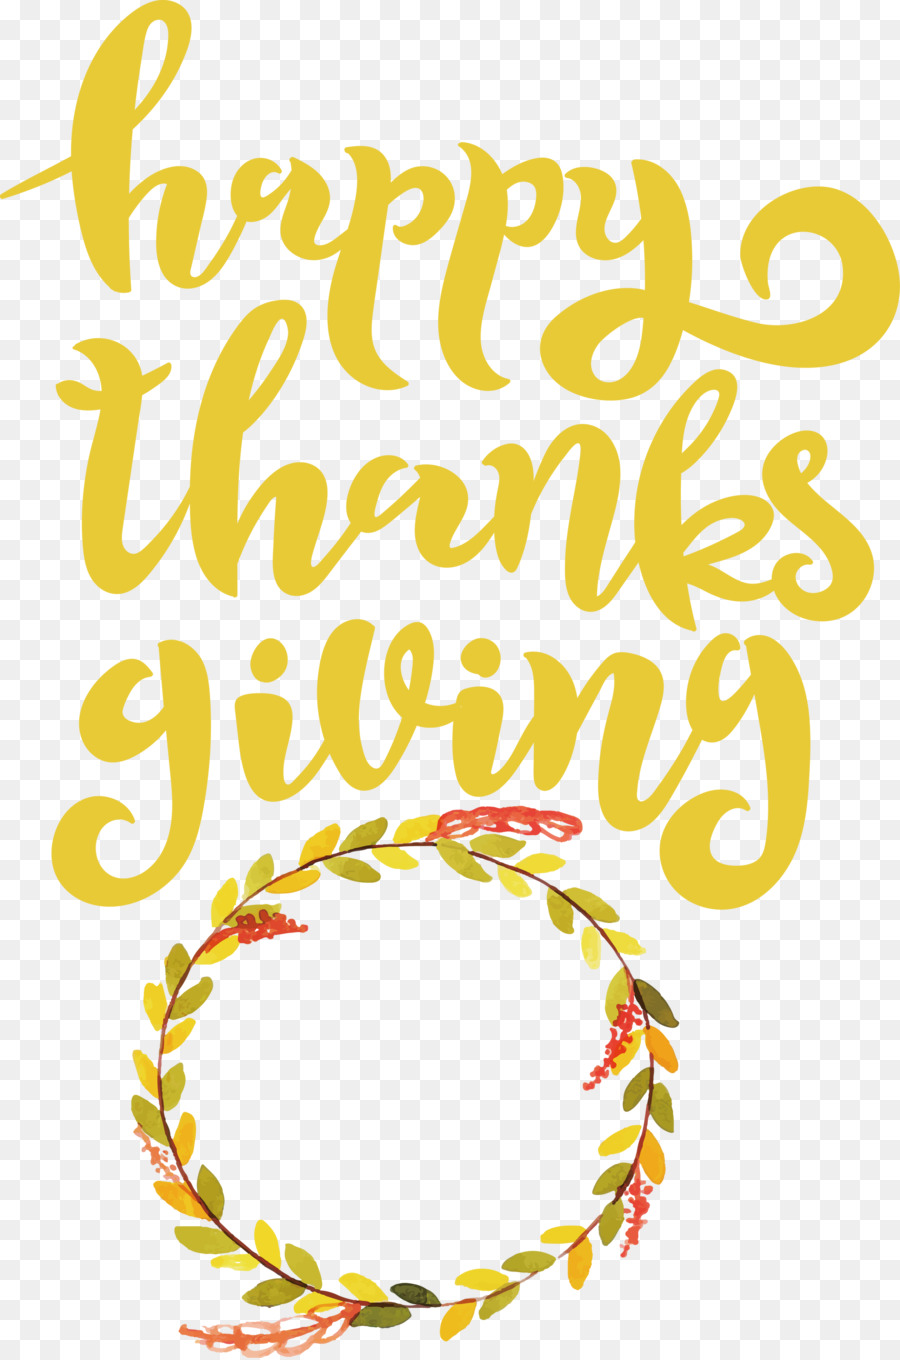 Happy Thanksgiving - 